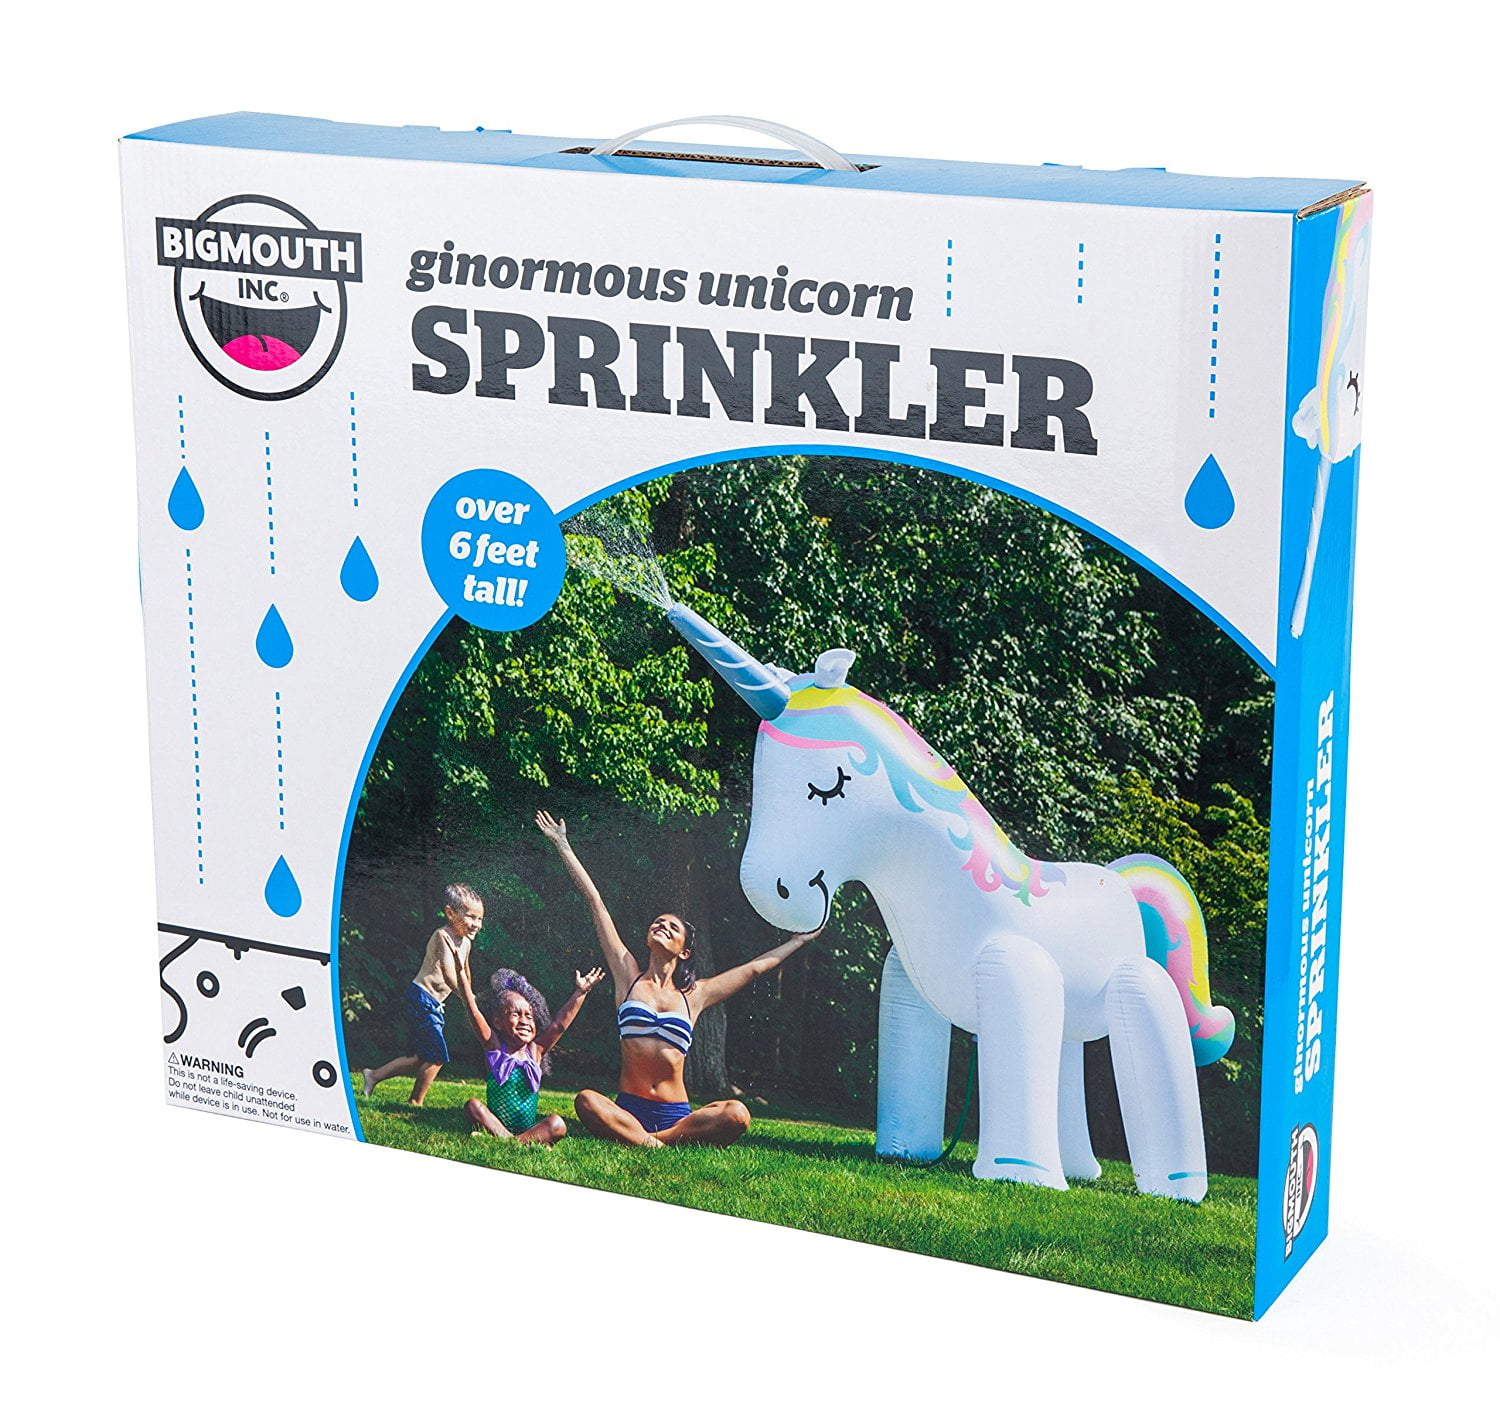 Giant Inflatable Unicorn Sprinkler Garden Fun Kid Toy Water Sprayer 6ft Tall New 